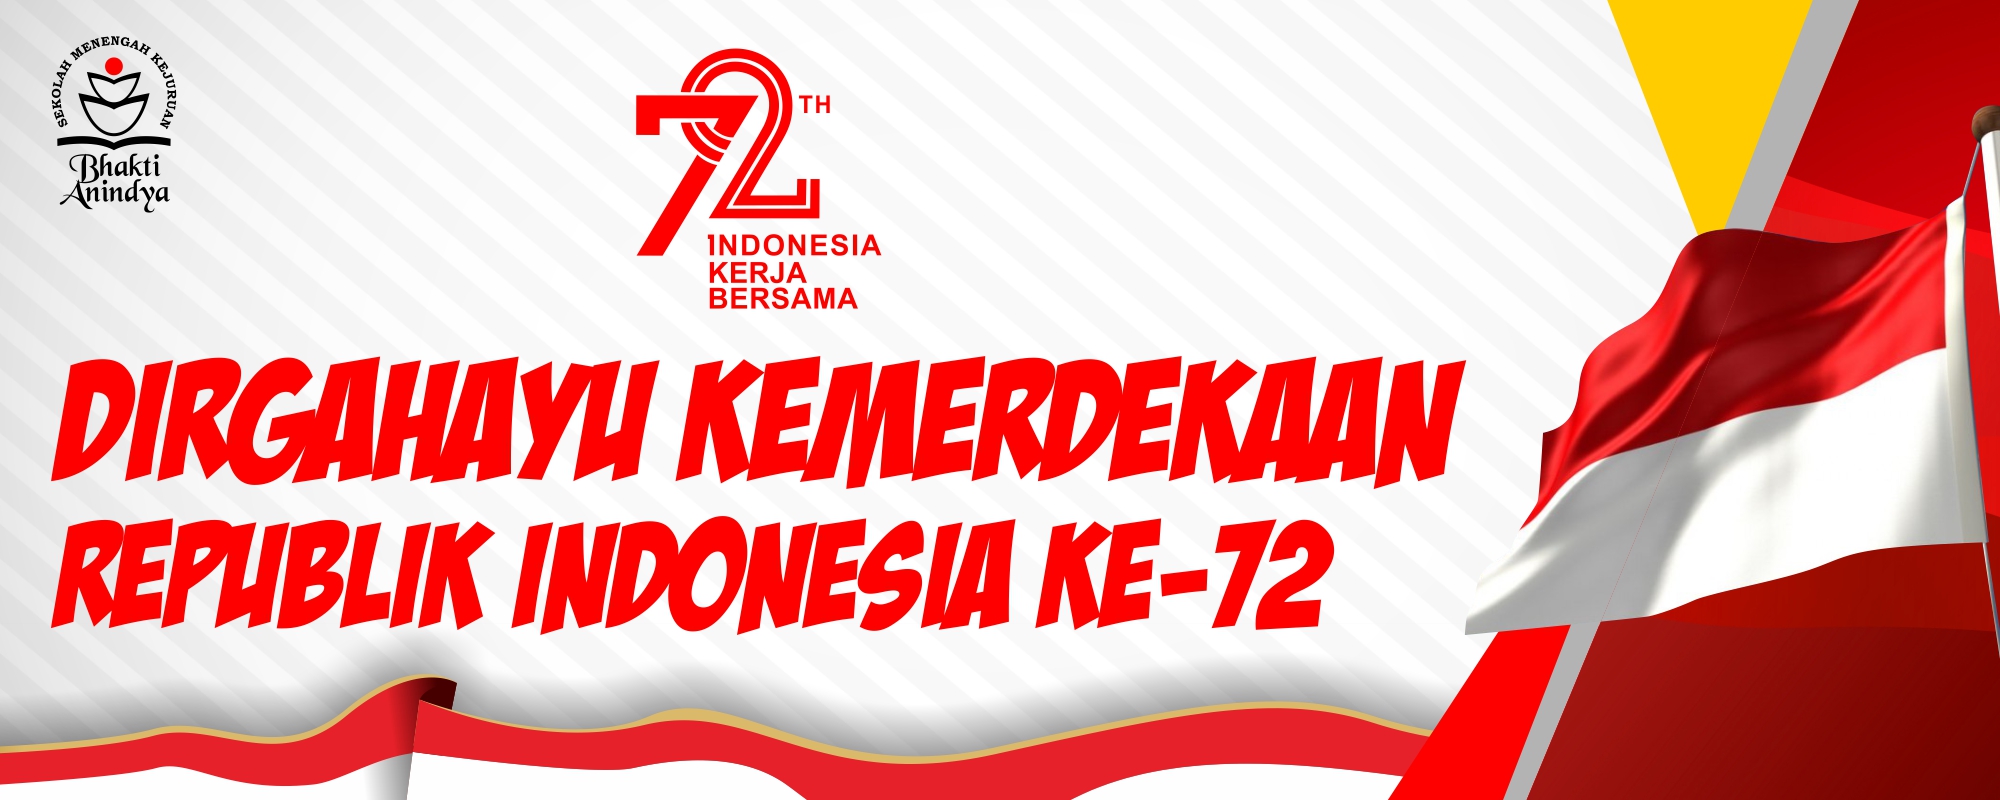 Dirgahayu Republik Indonesia ke-72 SMK Bhakti Anindya Tangerang